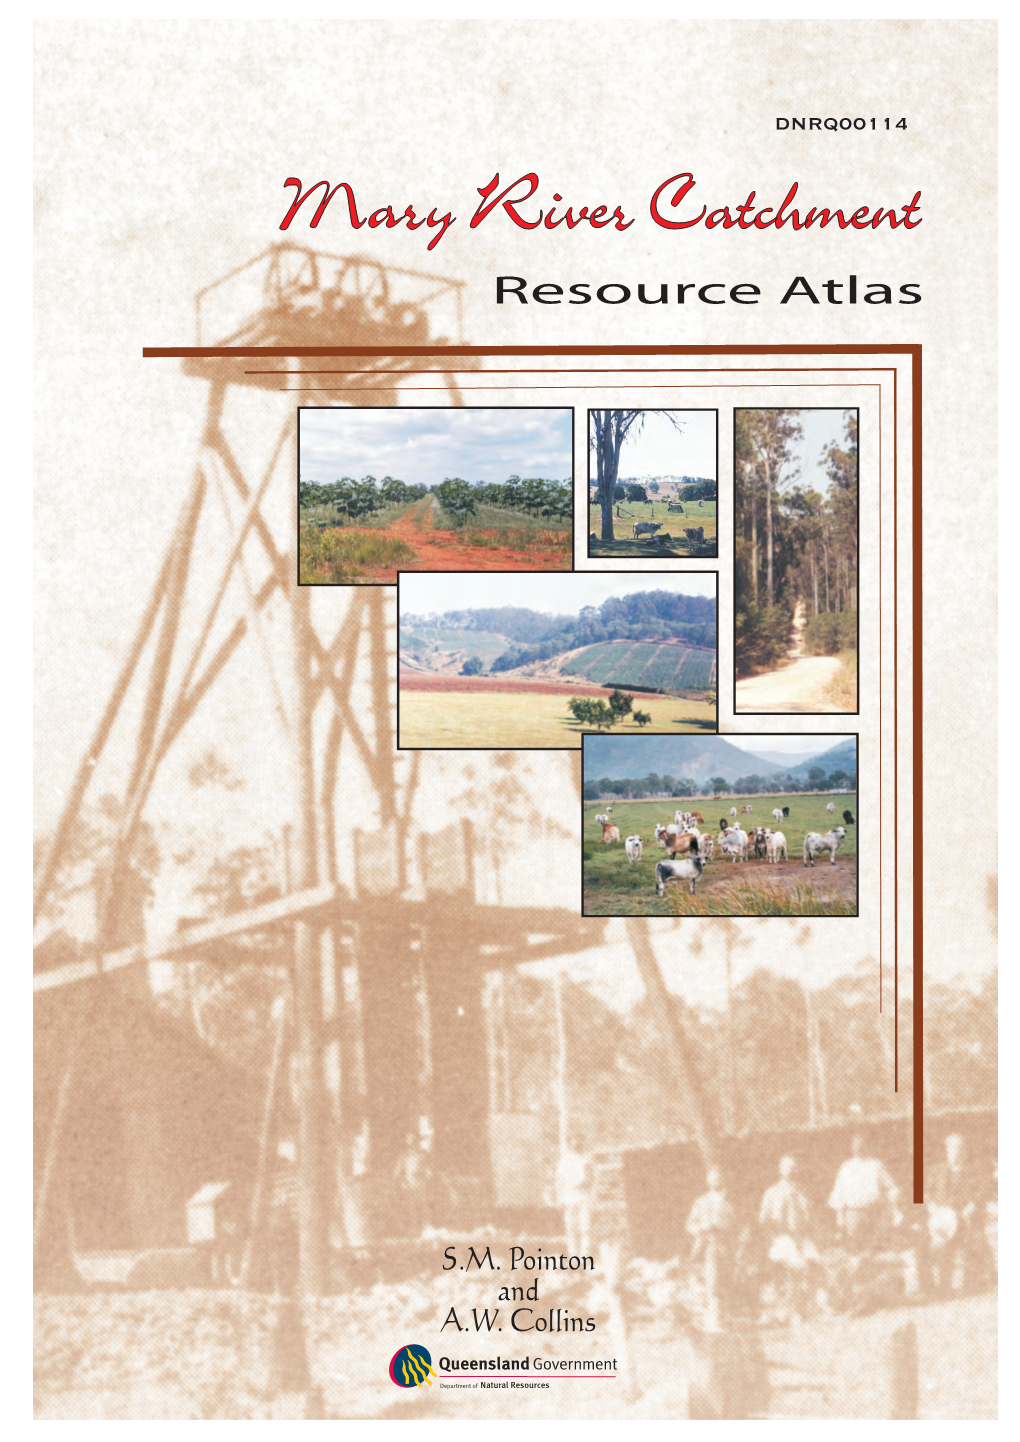 Resource Atlas